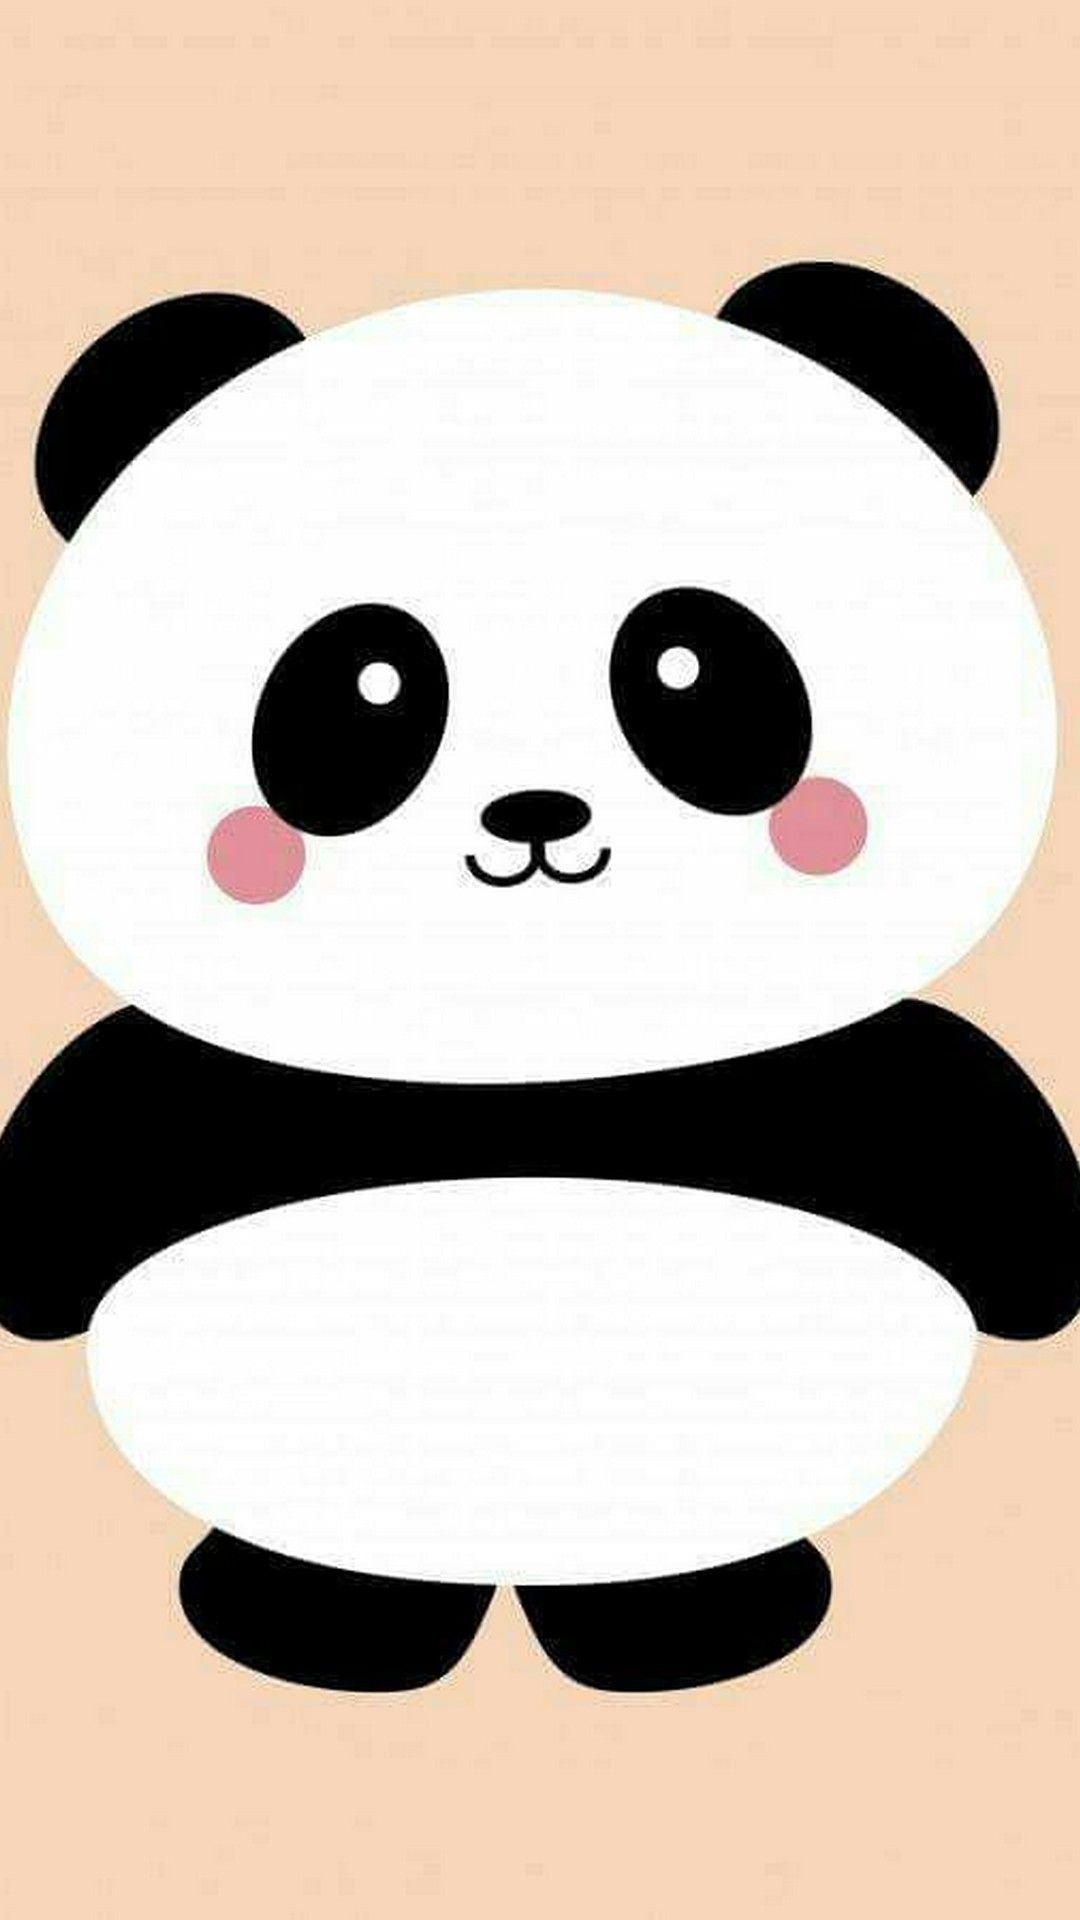 Cute Panda Images - Free Download on Freepik